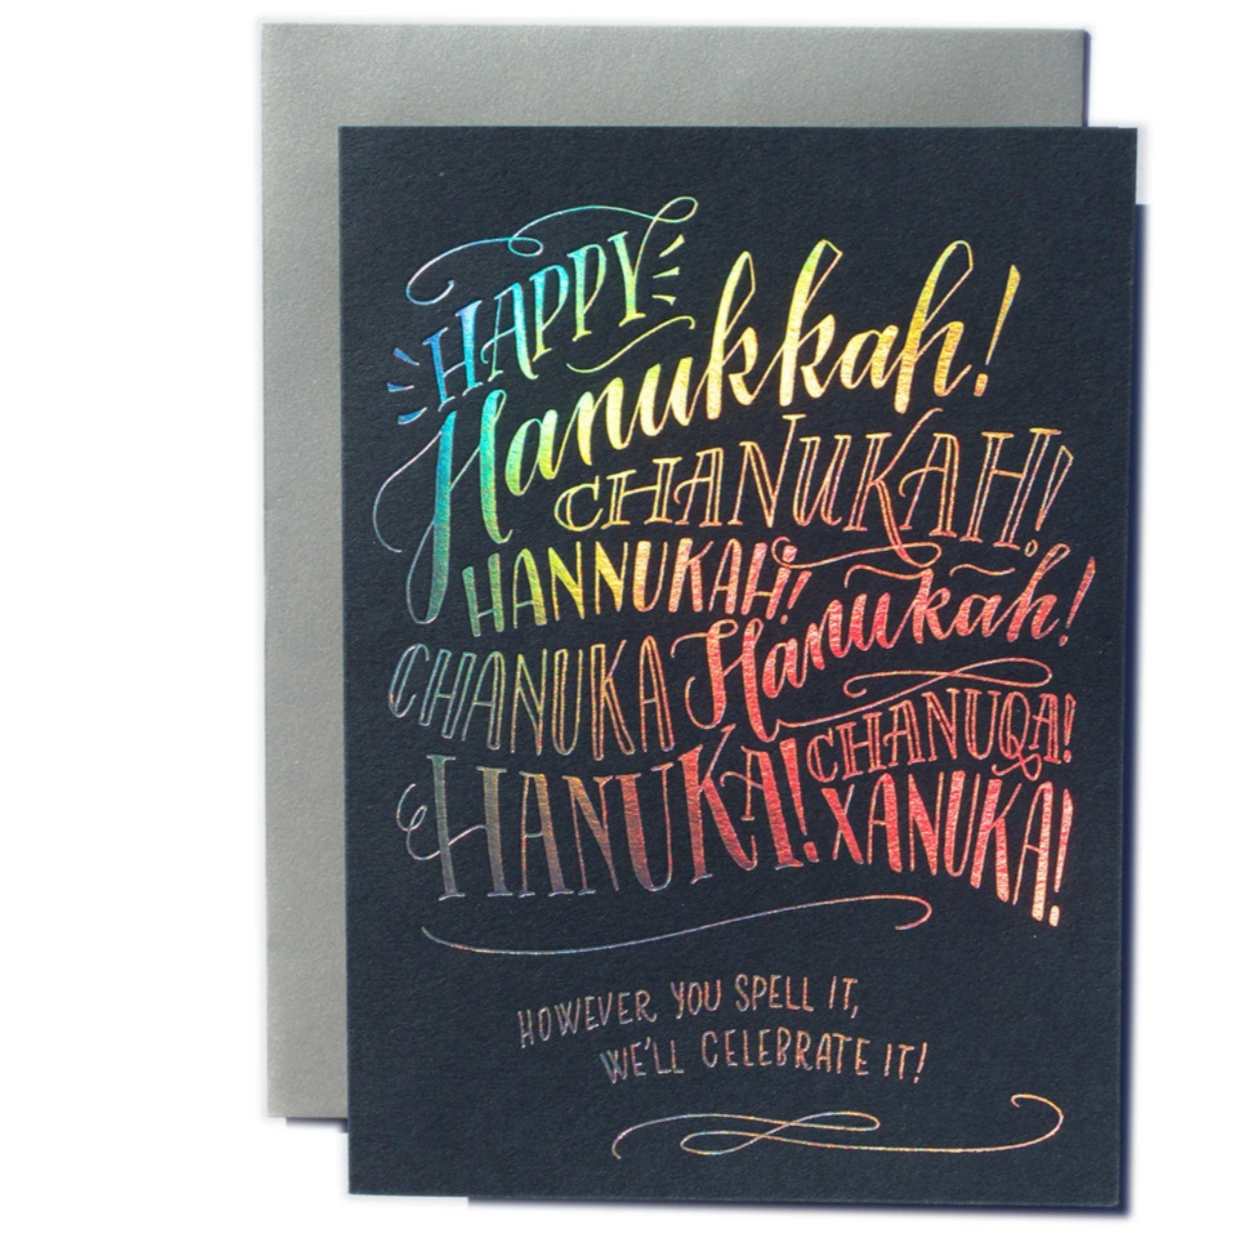 foiled card that reads " happy hanukkah! chanukah! hannukah!chanuks hanukah! Hanuuka! Chanuqa1 XANUKA! However yiu spell it, We'll Celebrate it!"